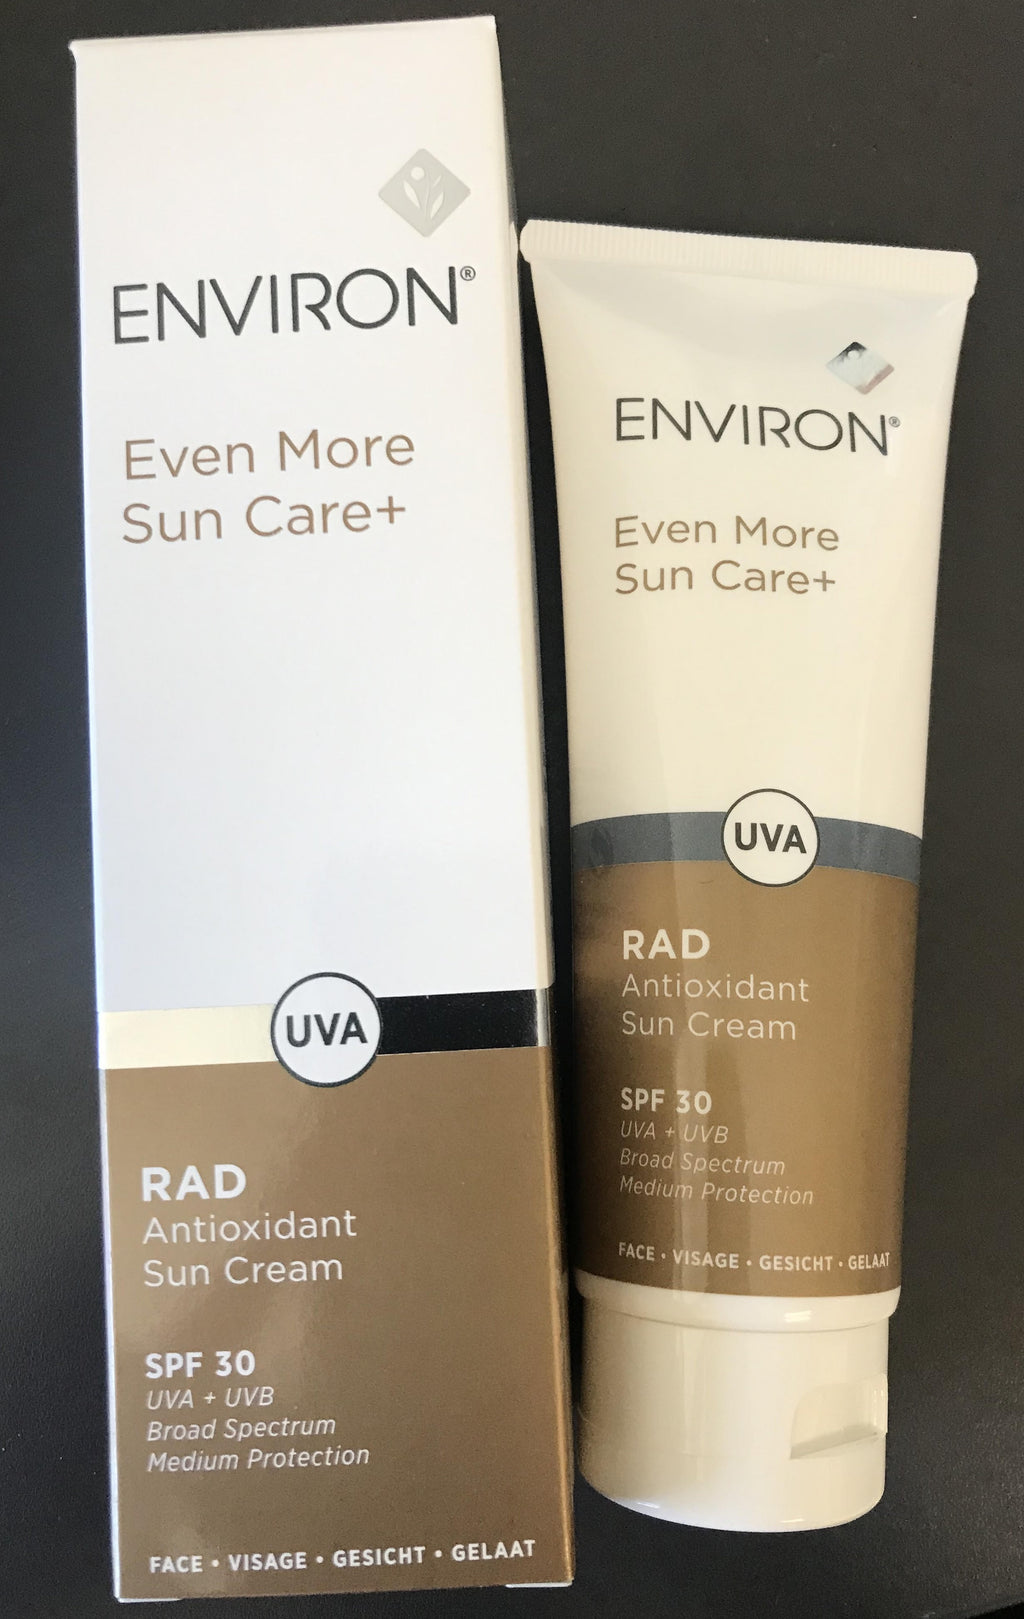 RAD Antioxidant Sunscreen SPF 30